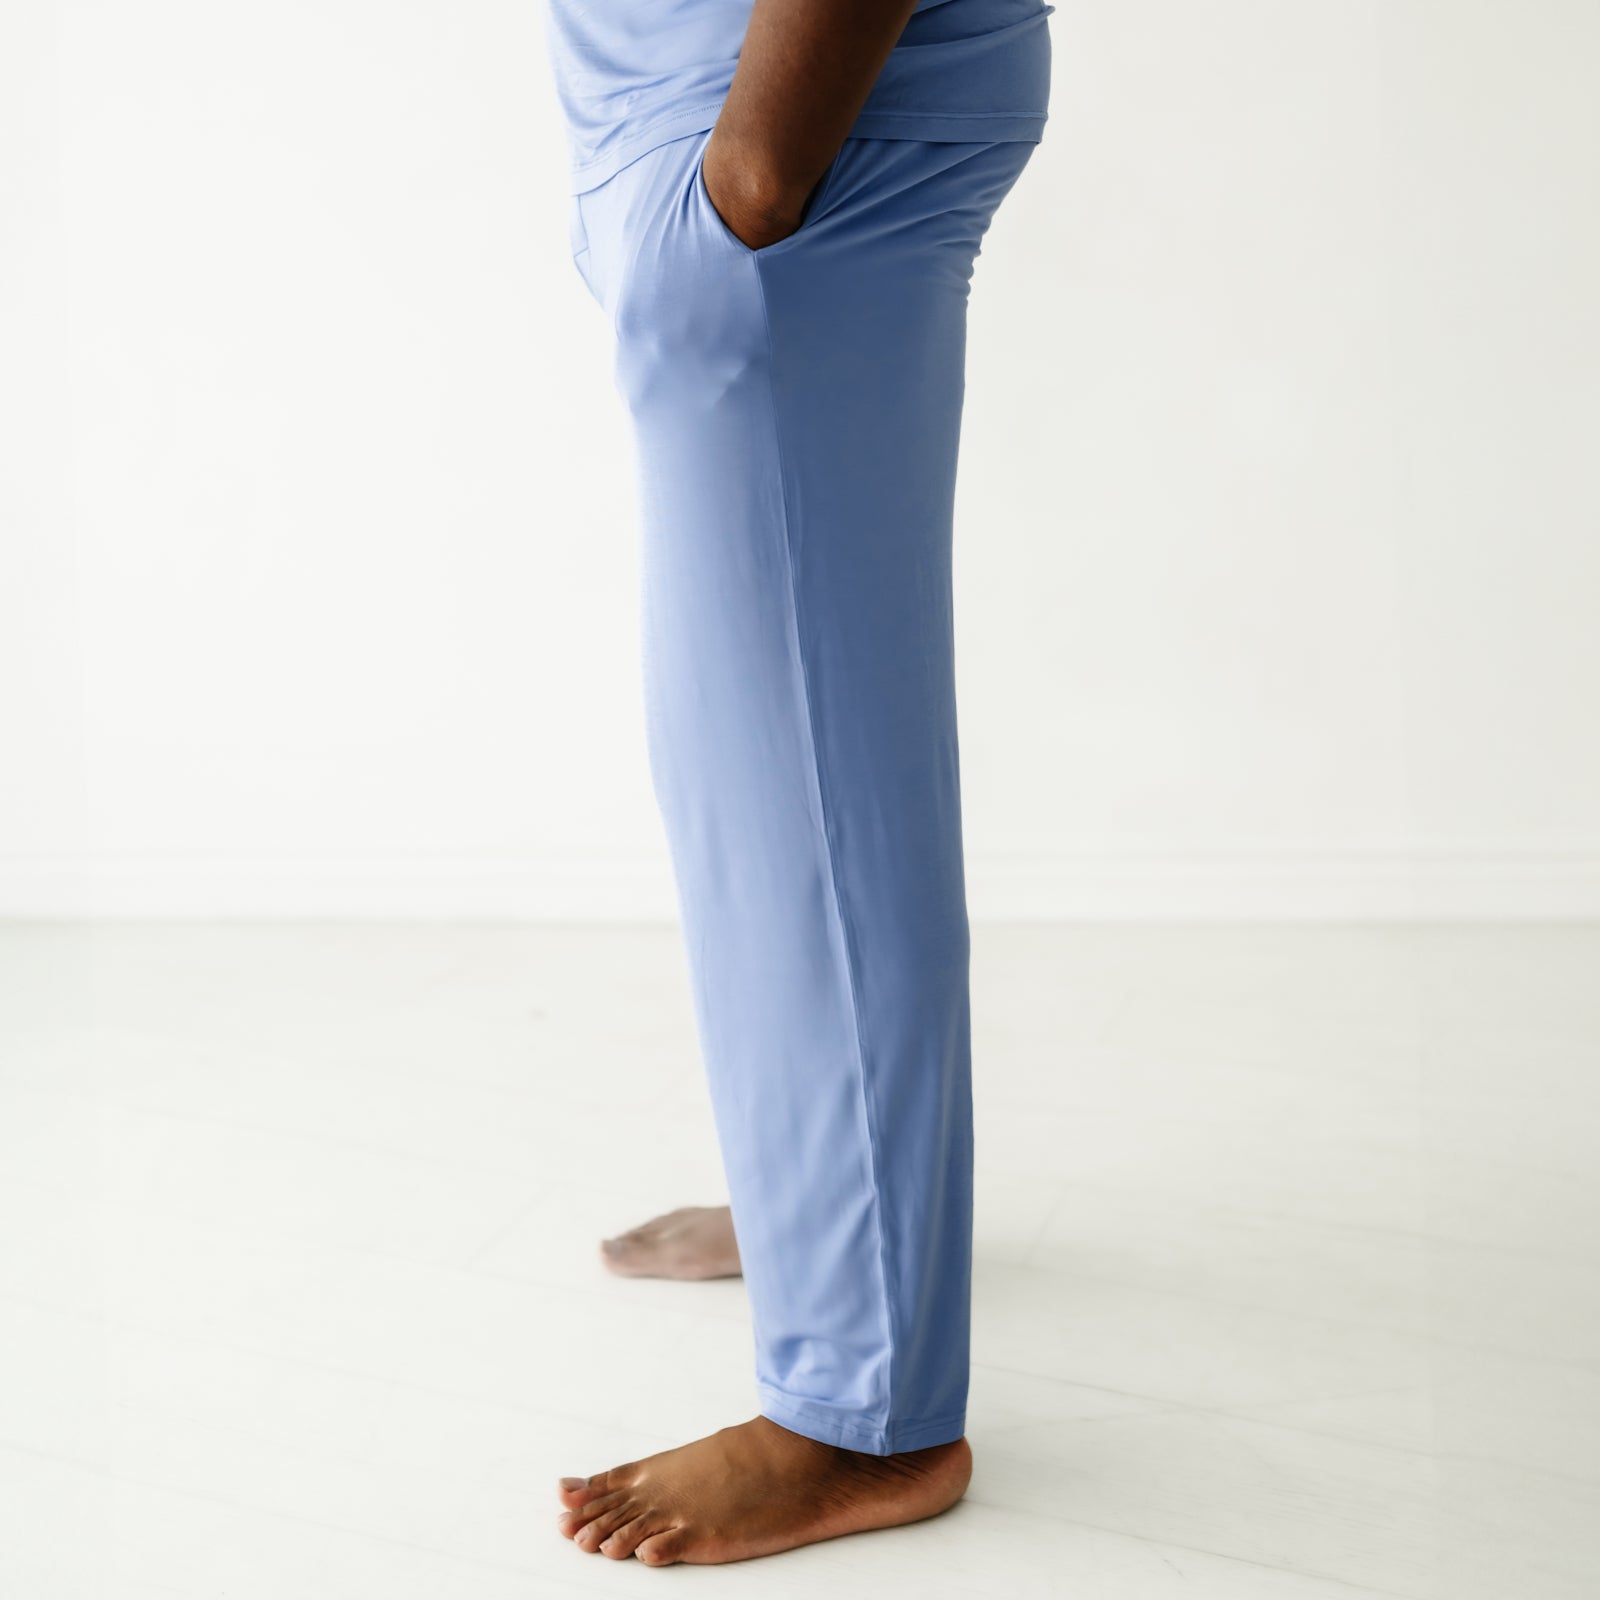 Profile image of a man wearing Slate Blue men's pajama pants